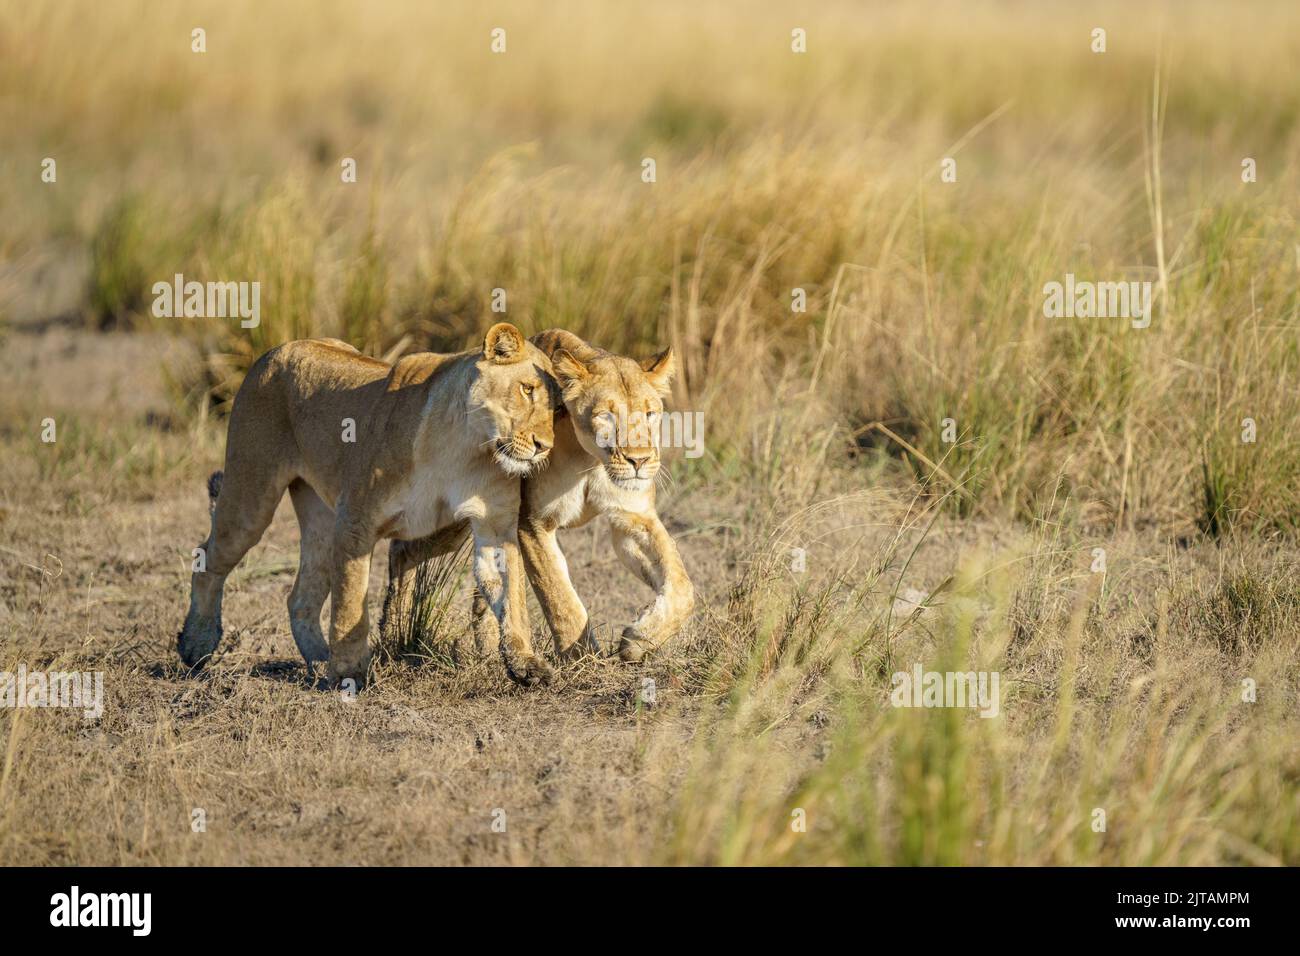 Lionesses, 2 animali adulti, insieme attraversando praterie. Parco Nazionale di Chobe, Botswana, Africa Foto Stock